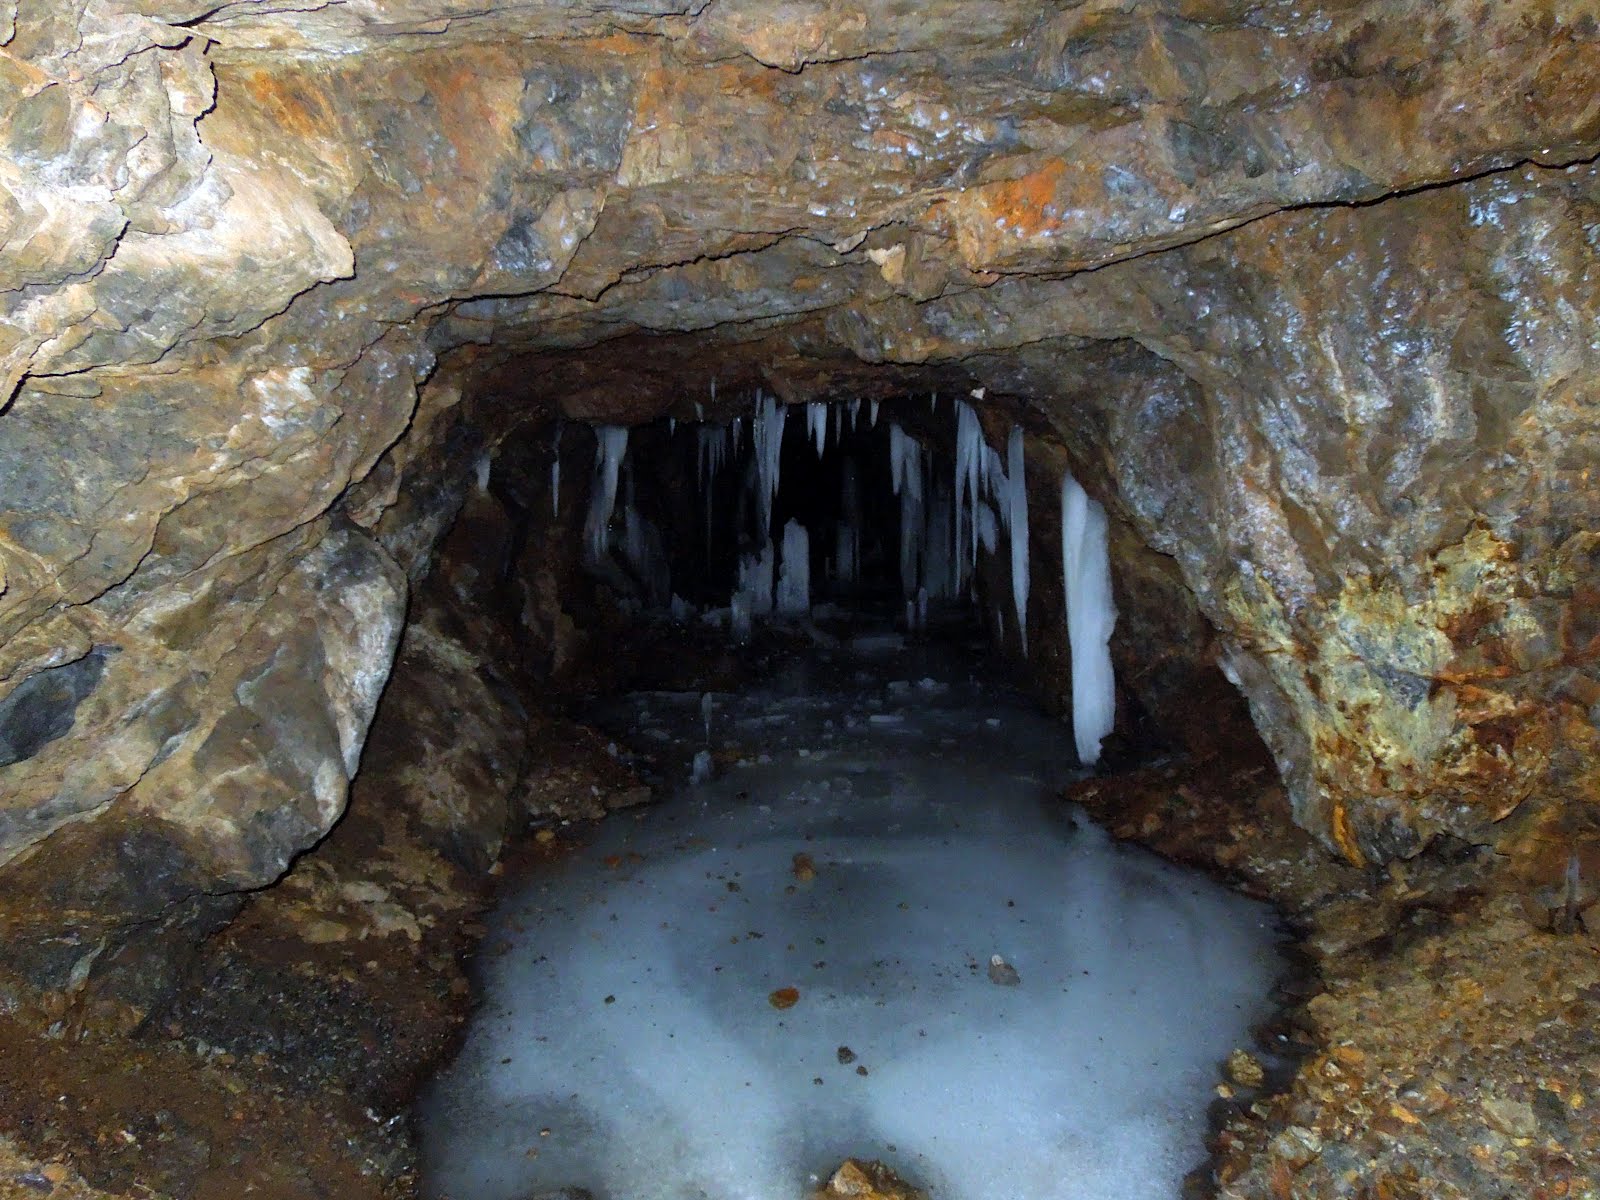 ESL Wilderness Ranch: Gold mine, now Ice cave